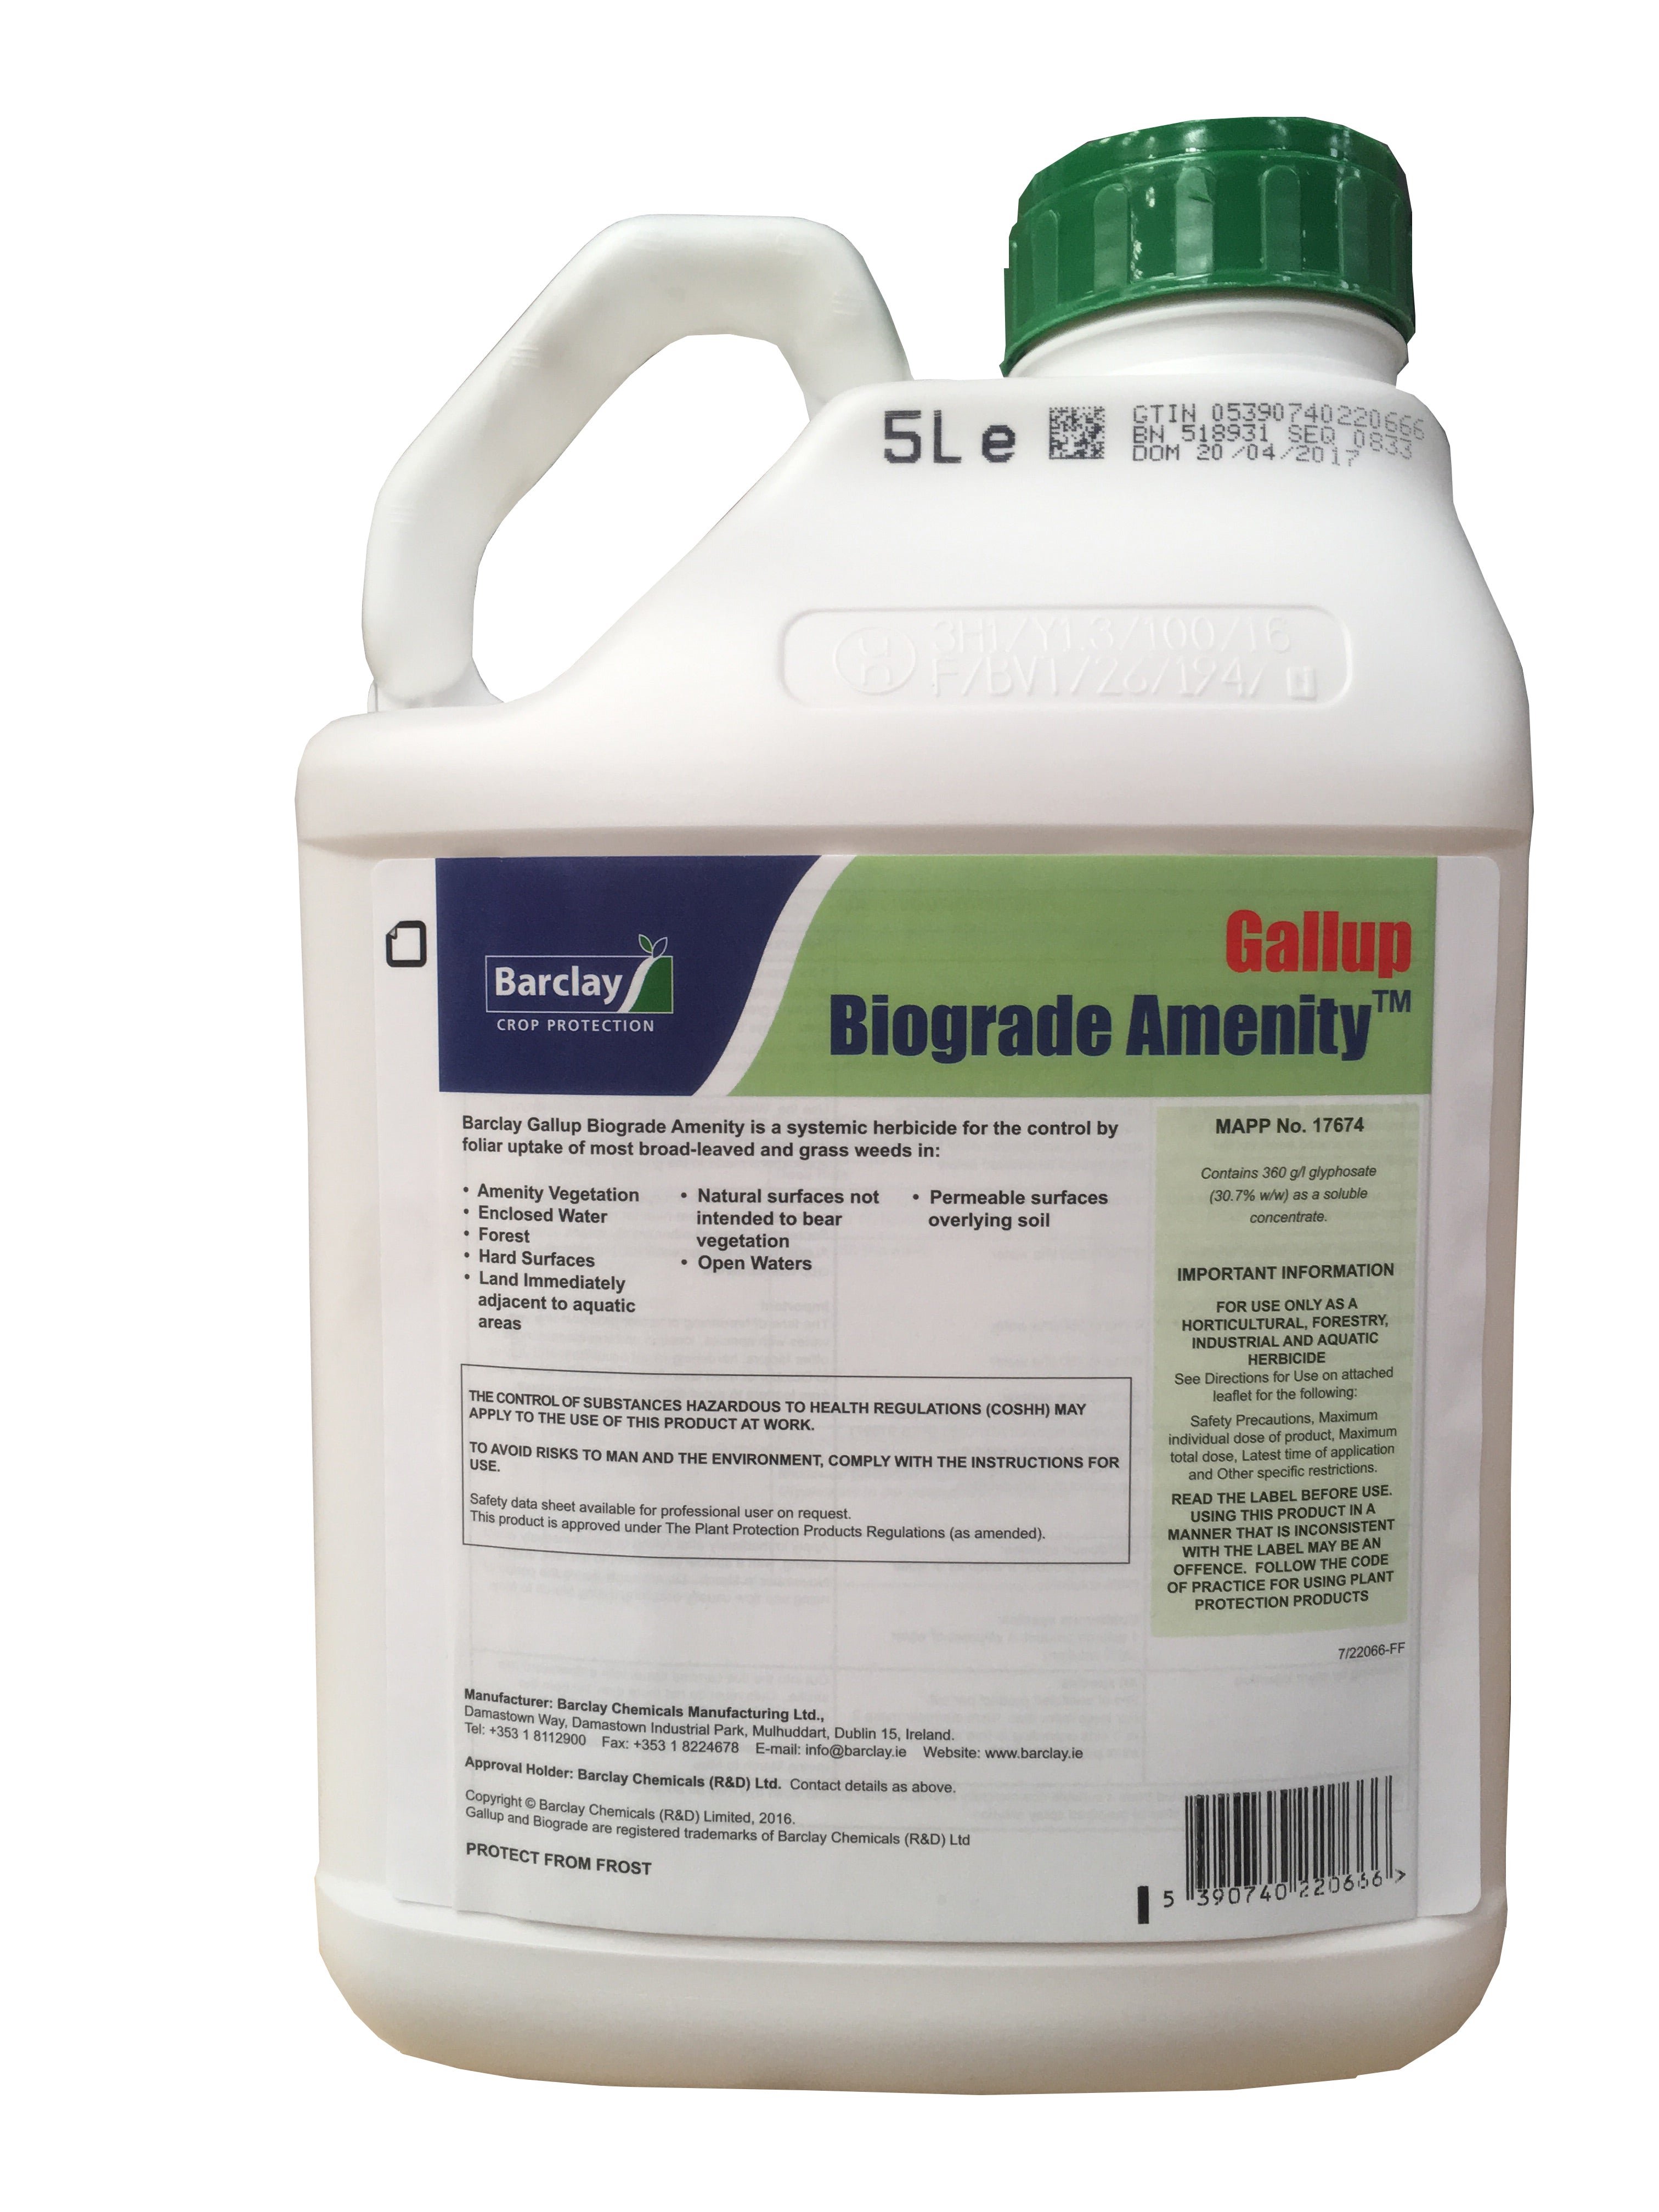 Barclay Gallup Biograde Amenity Glyphosate 5L